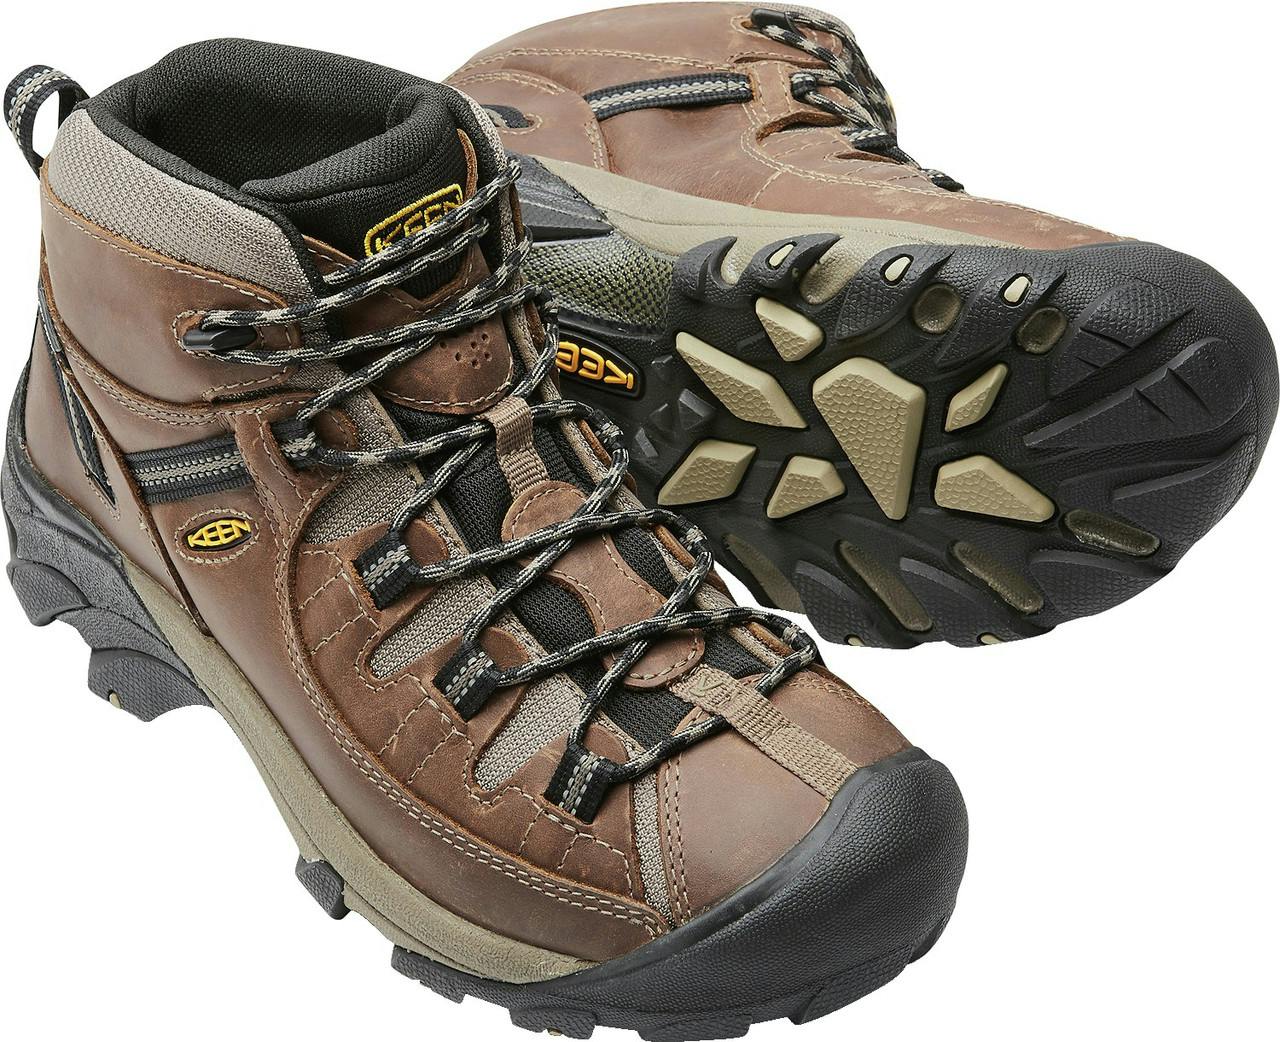 Targhee II Mid Waterproof Light Trail Shoes Shitake/Brindle